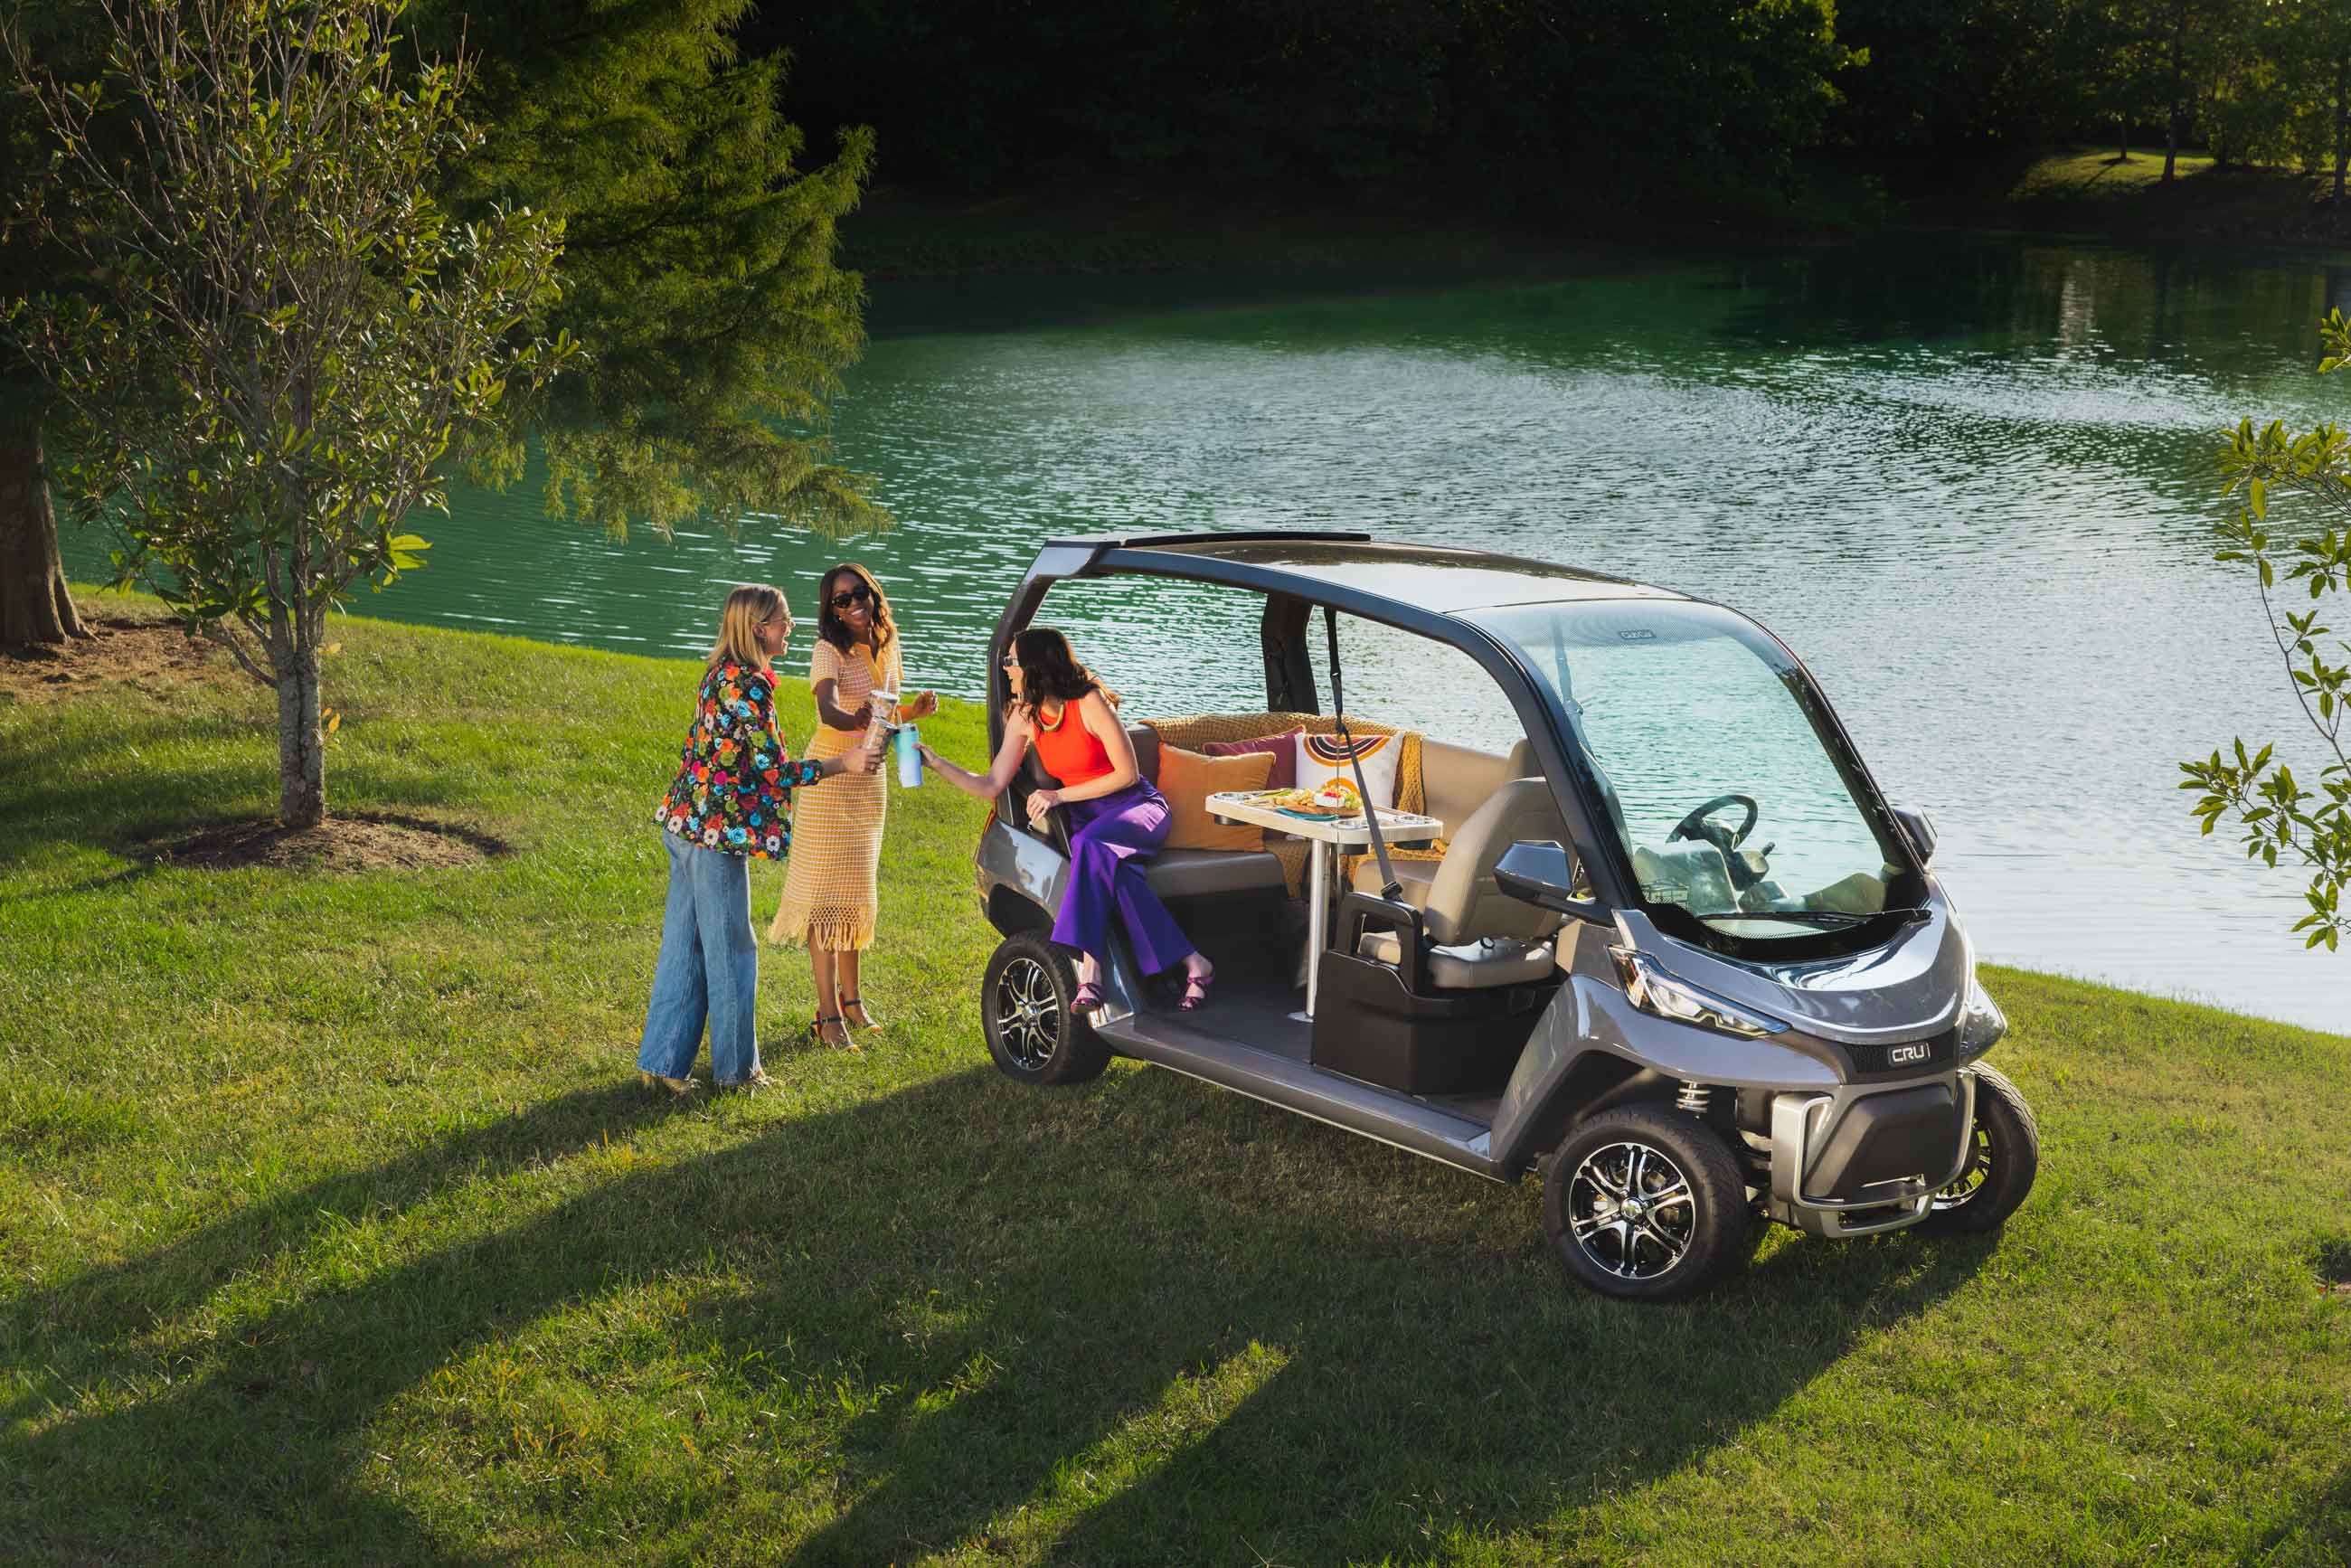 Friends enjoying a picnic by the lake, using the CRU Club Car as a social space.